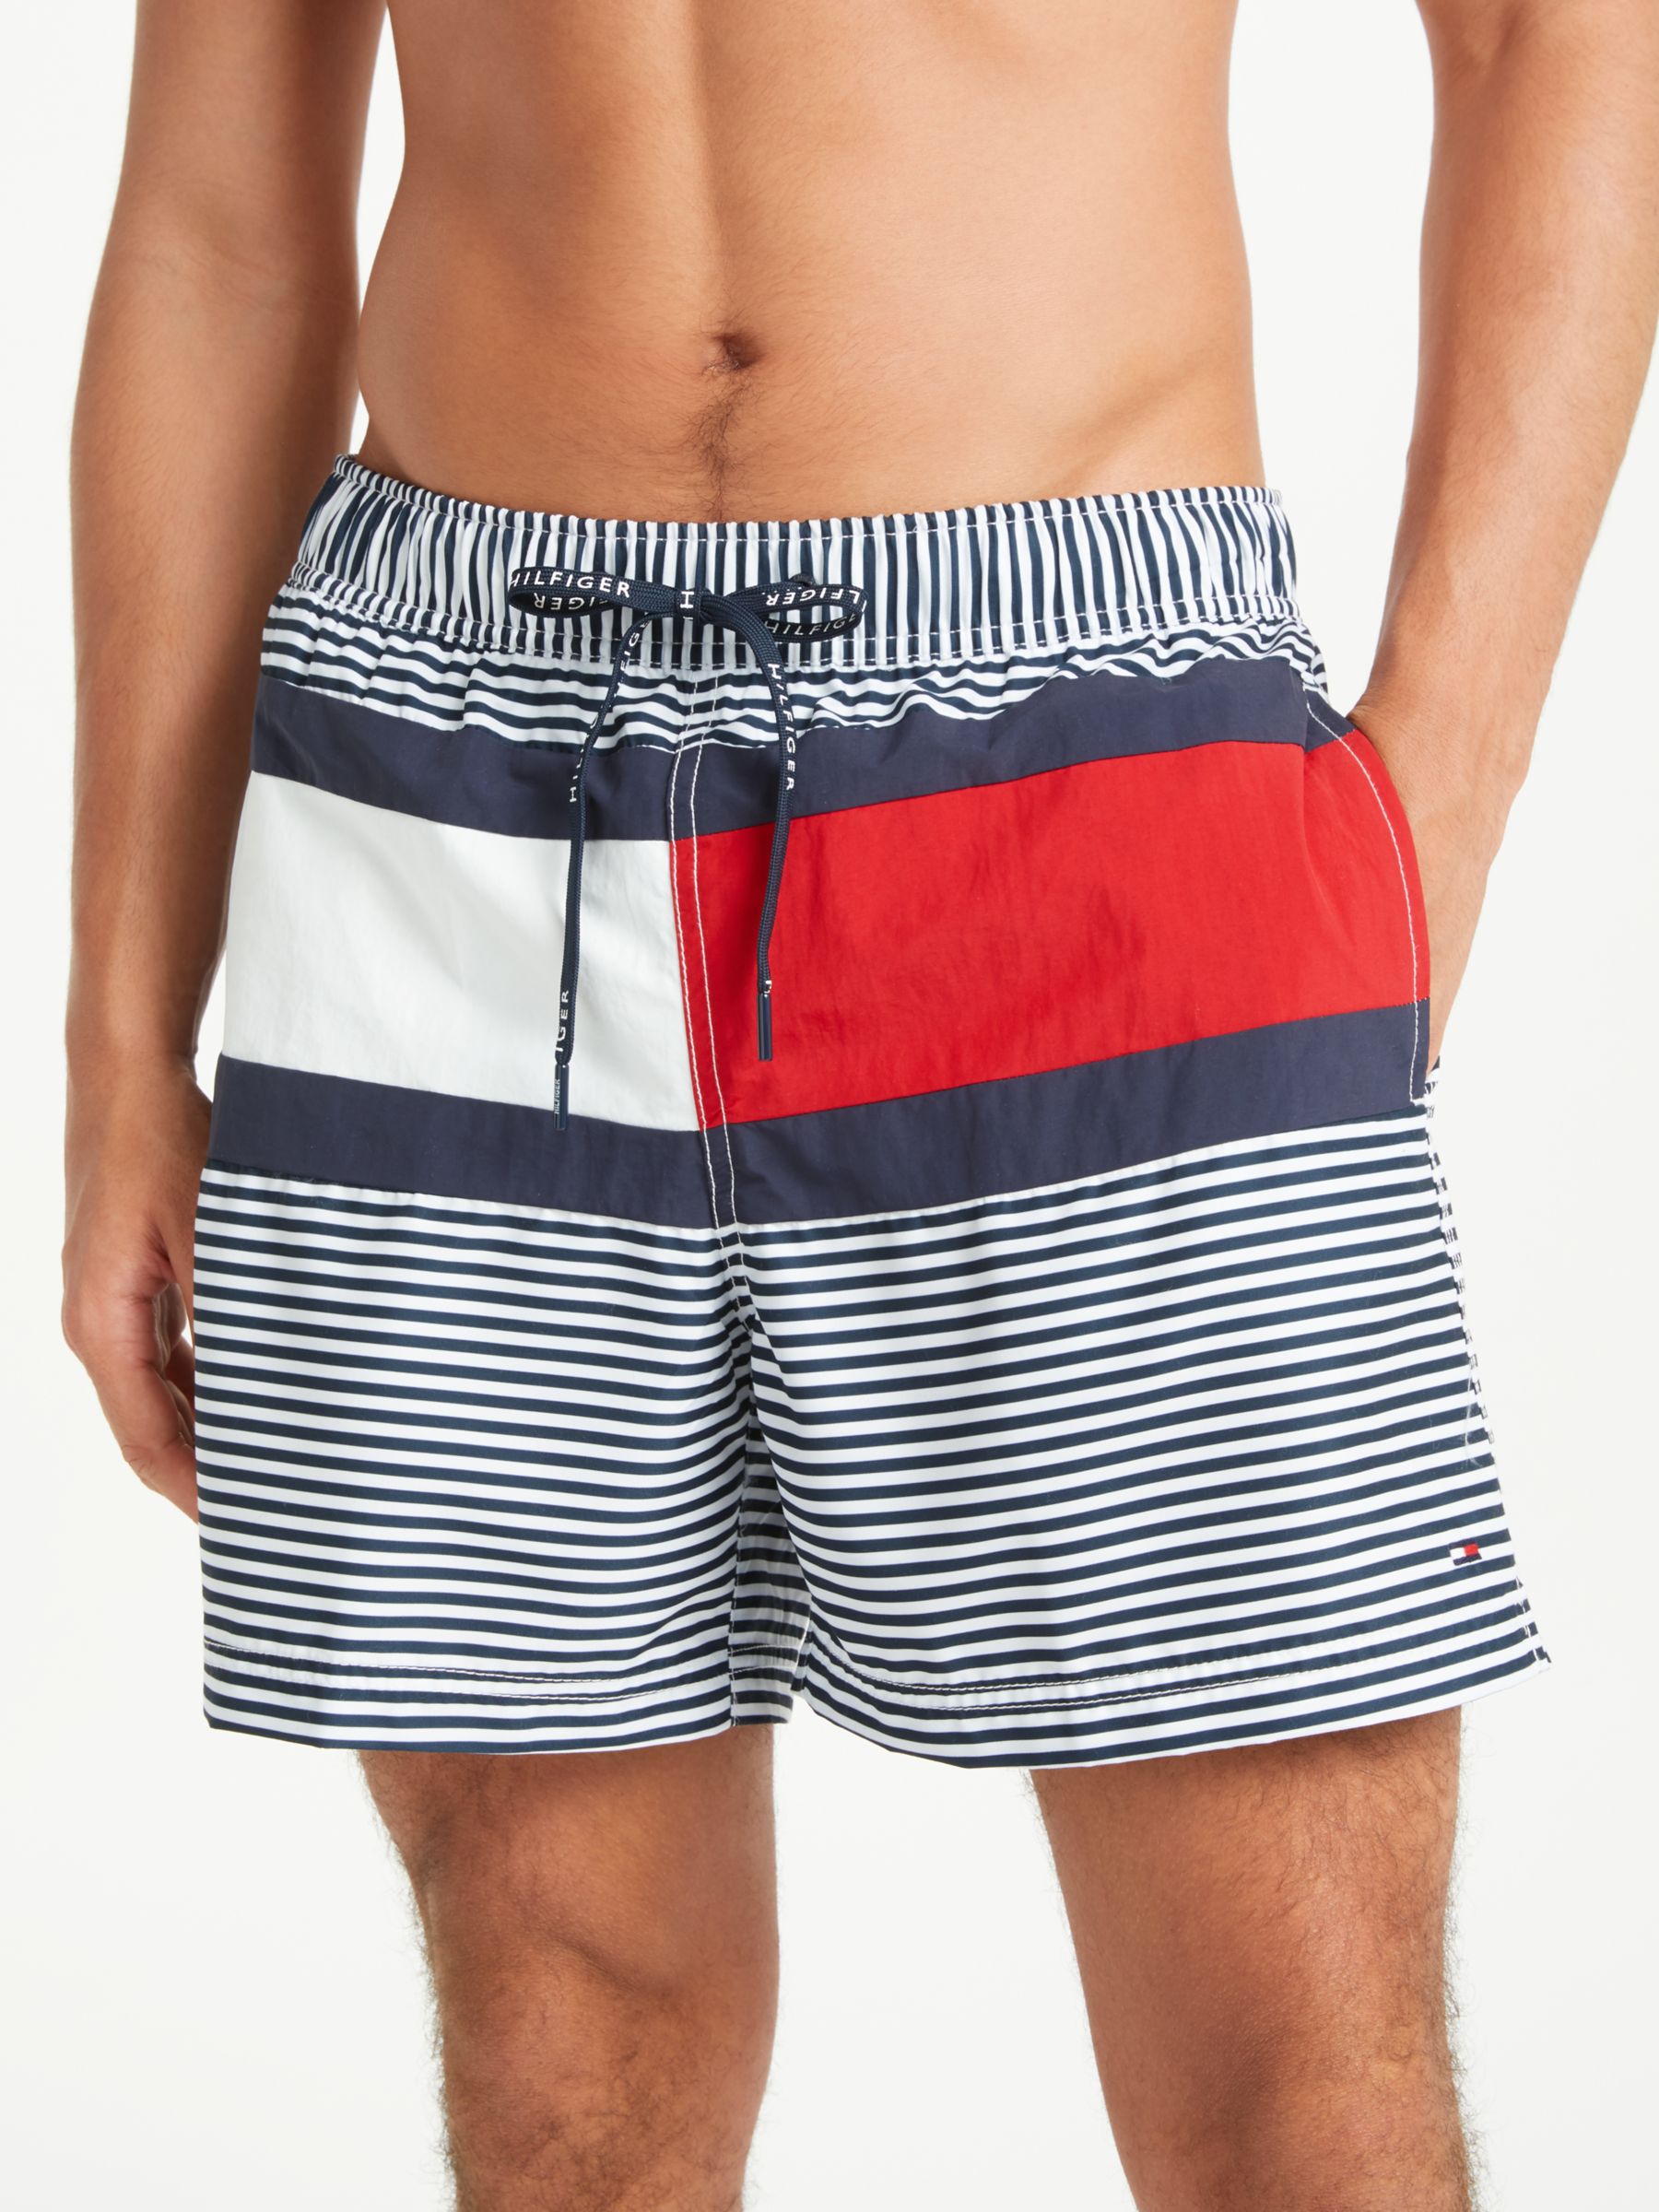 hilfiger swim shorts sale